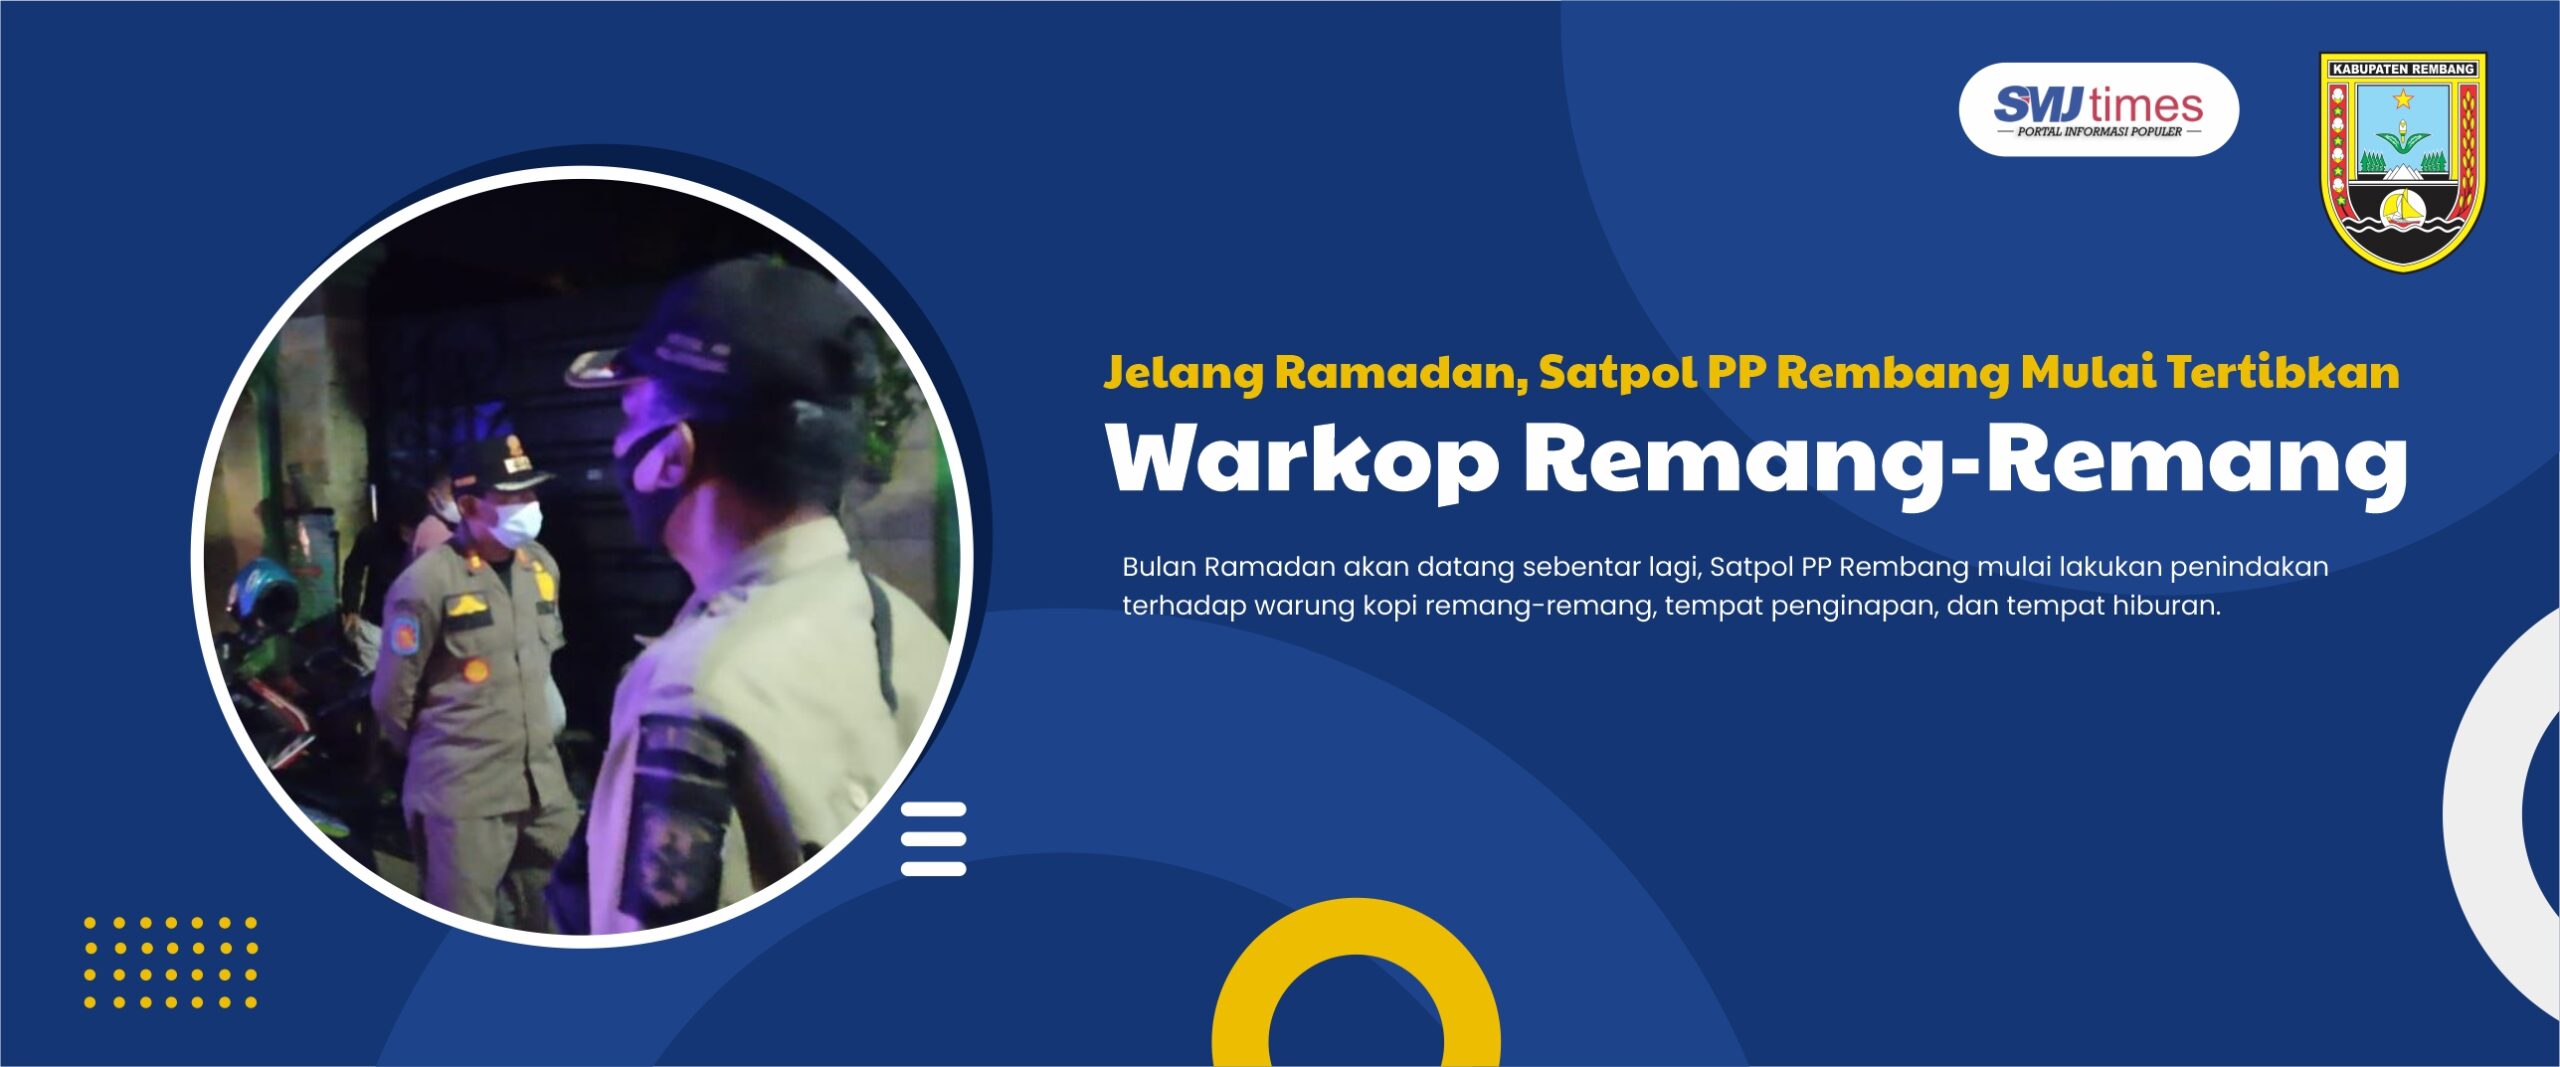 Jelang_Ramadan,_Satpol_PP_Rembang_Mulai_Tertibkan_Warkop_Remang